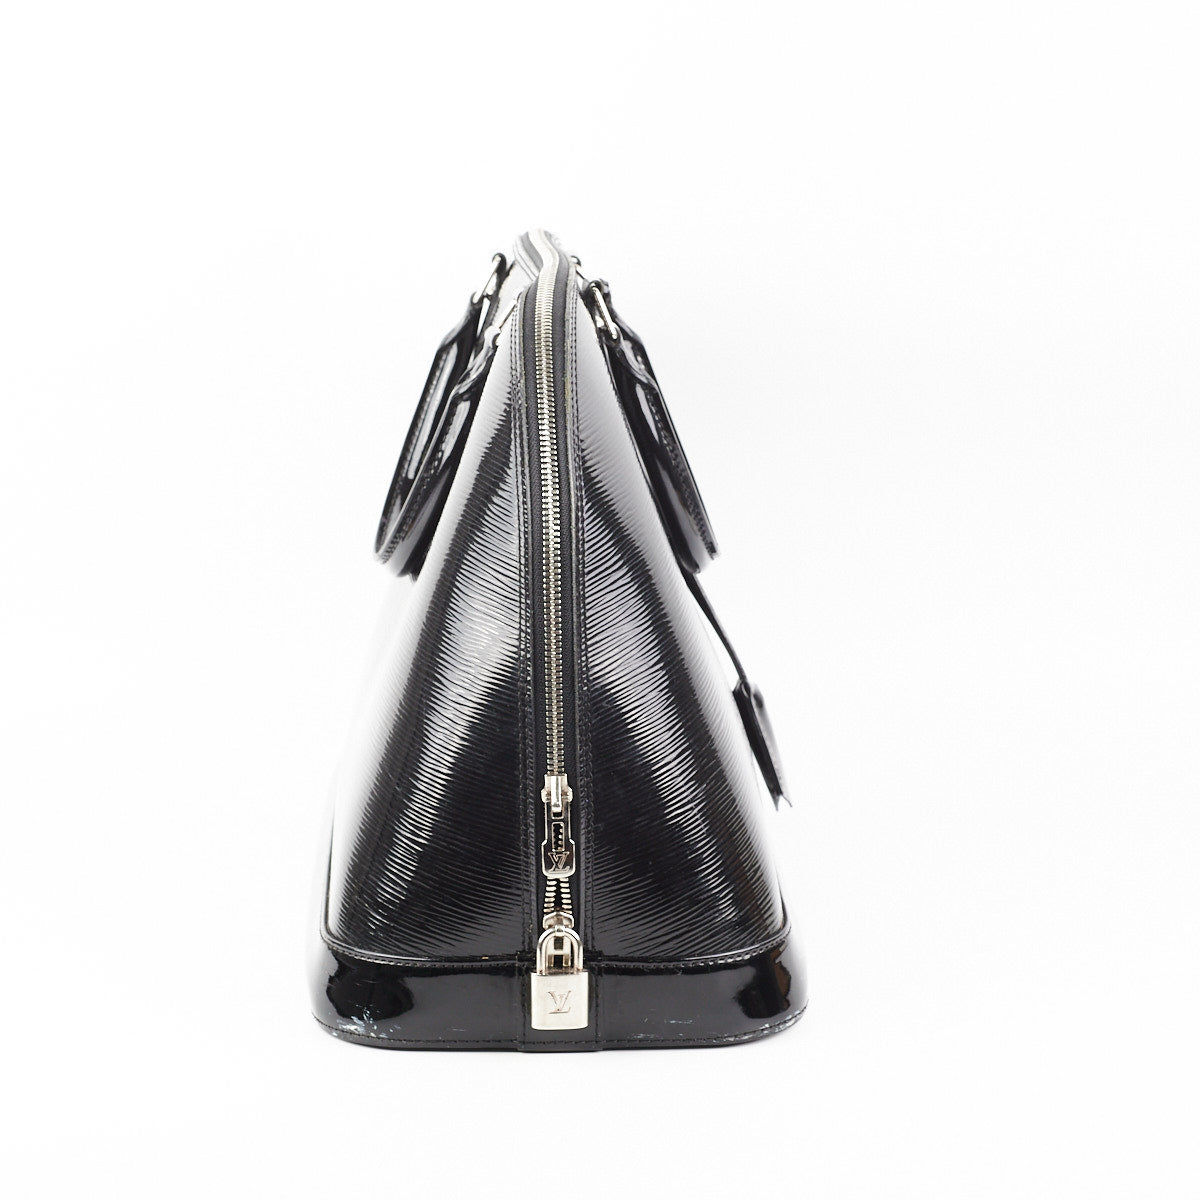 Louis Vuitton Alma handbag in black épi leather, Gold hardware at